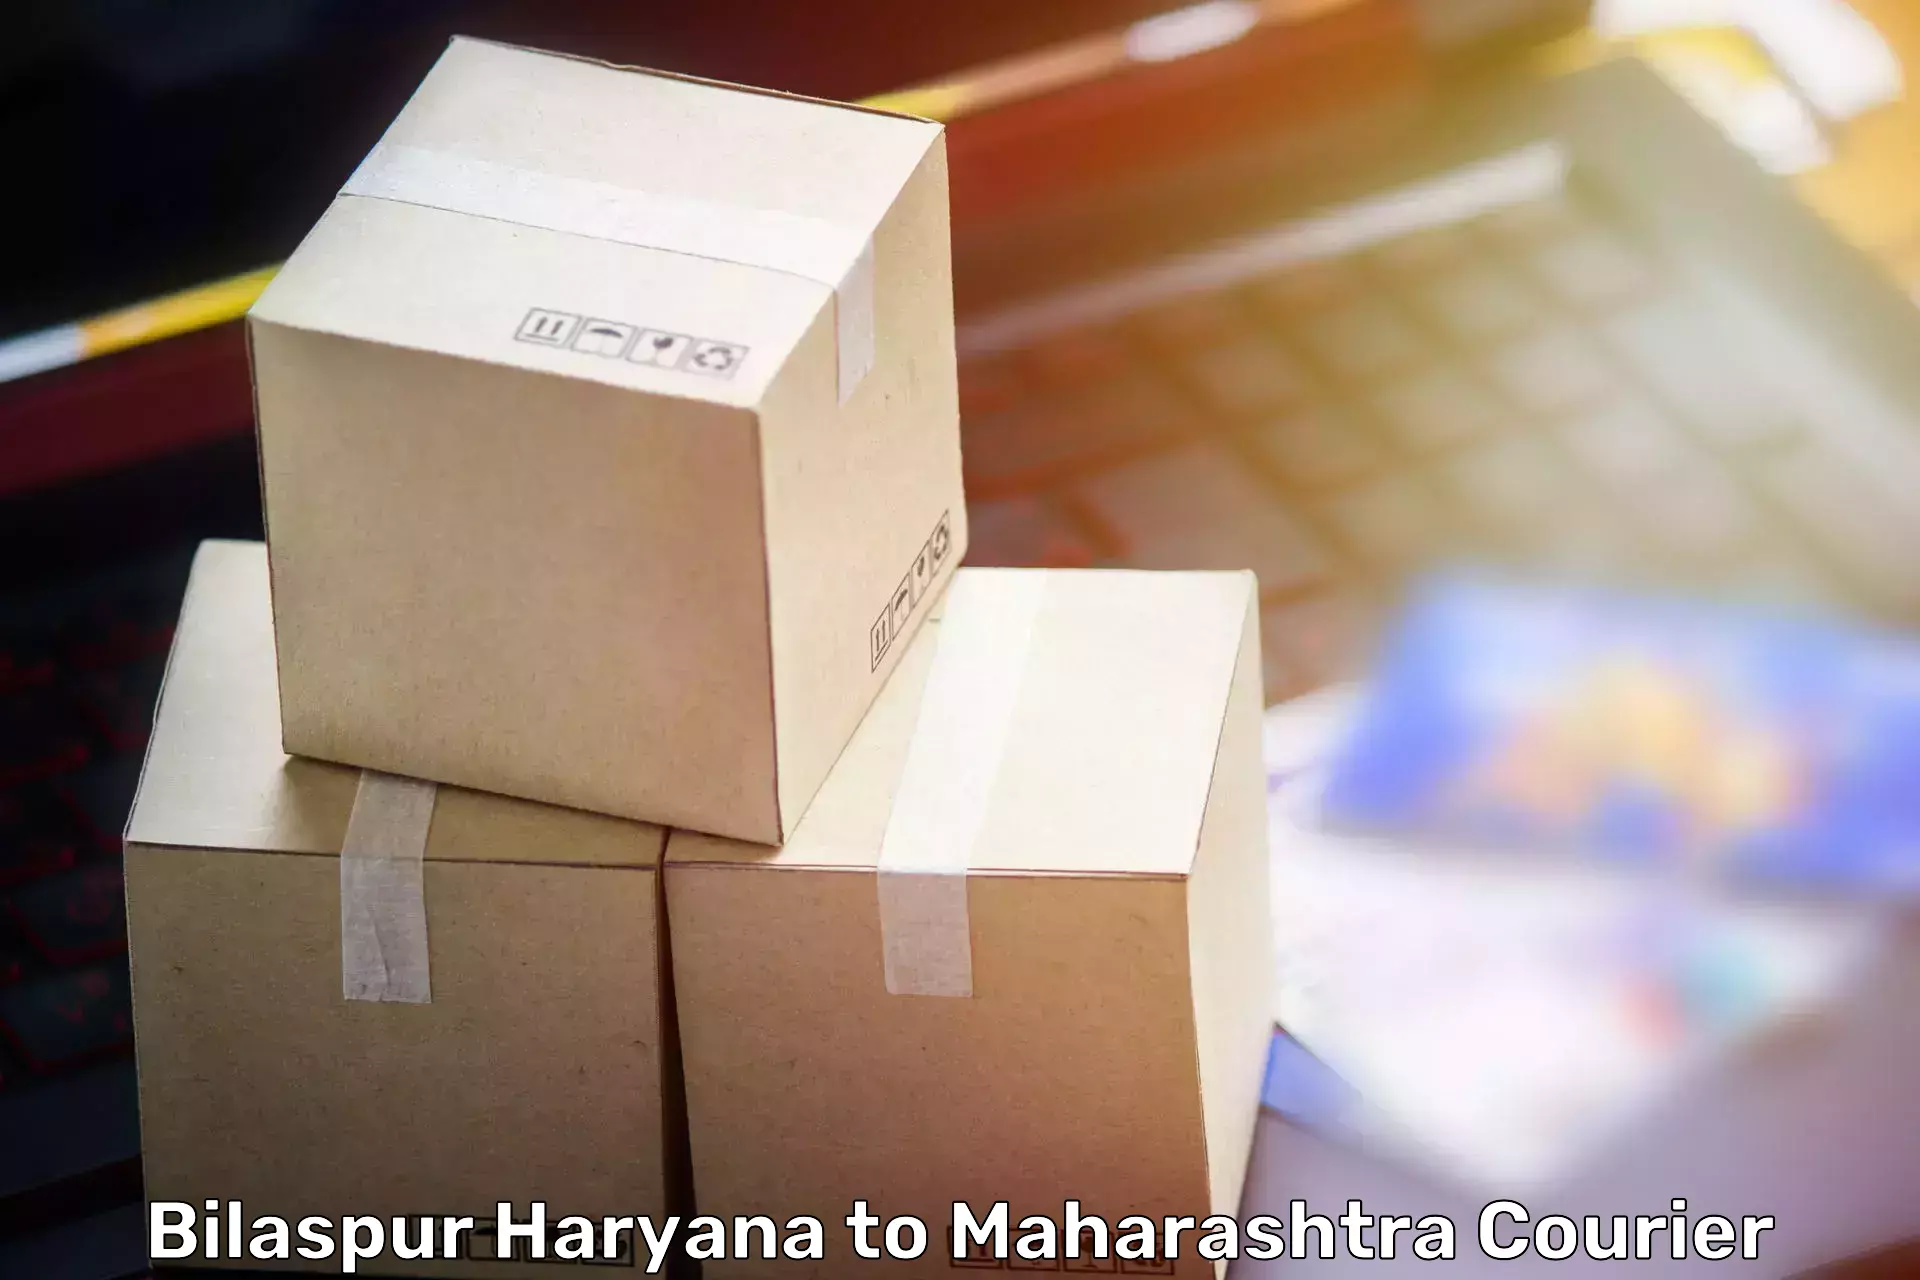 Furniture transport experts Bilaspur Haryana to Mahabaleshwar